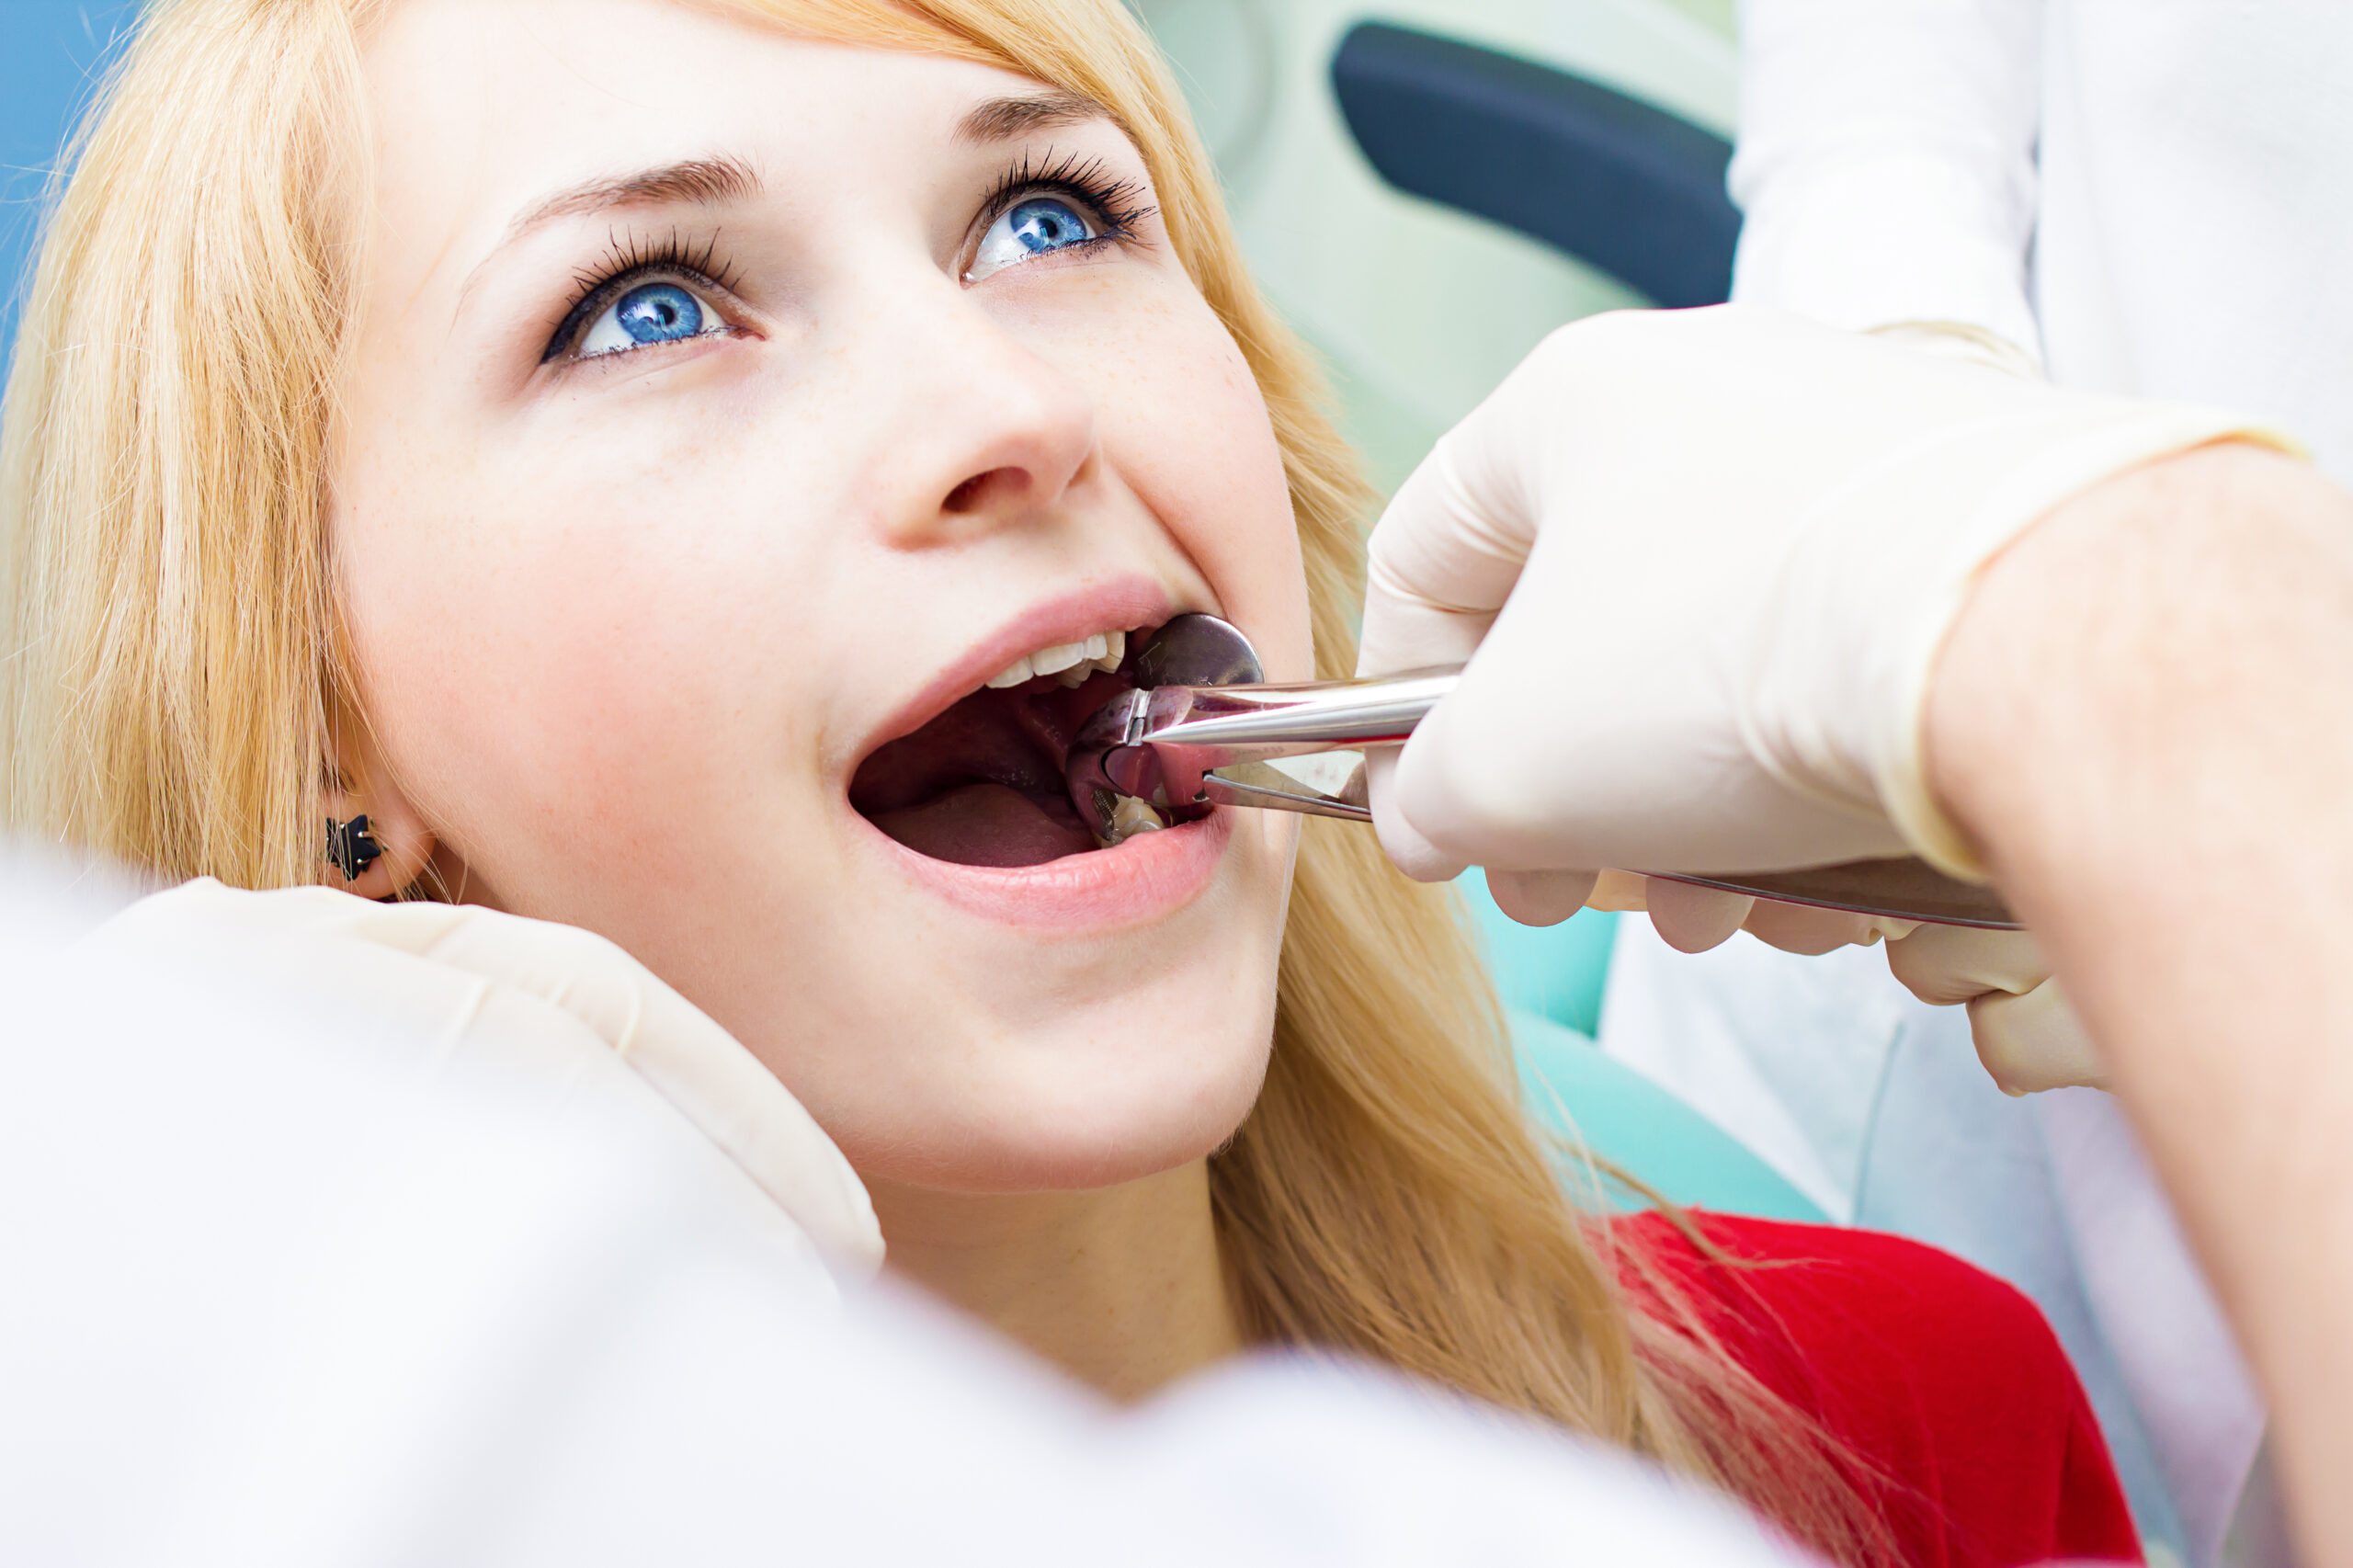 Tooth extraction chattanooga periodontics dental implants